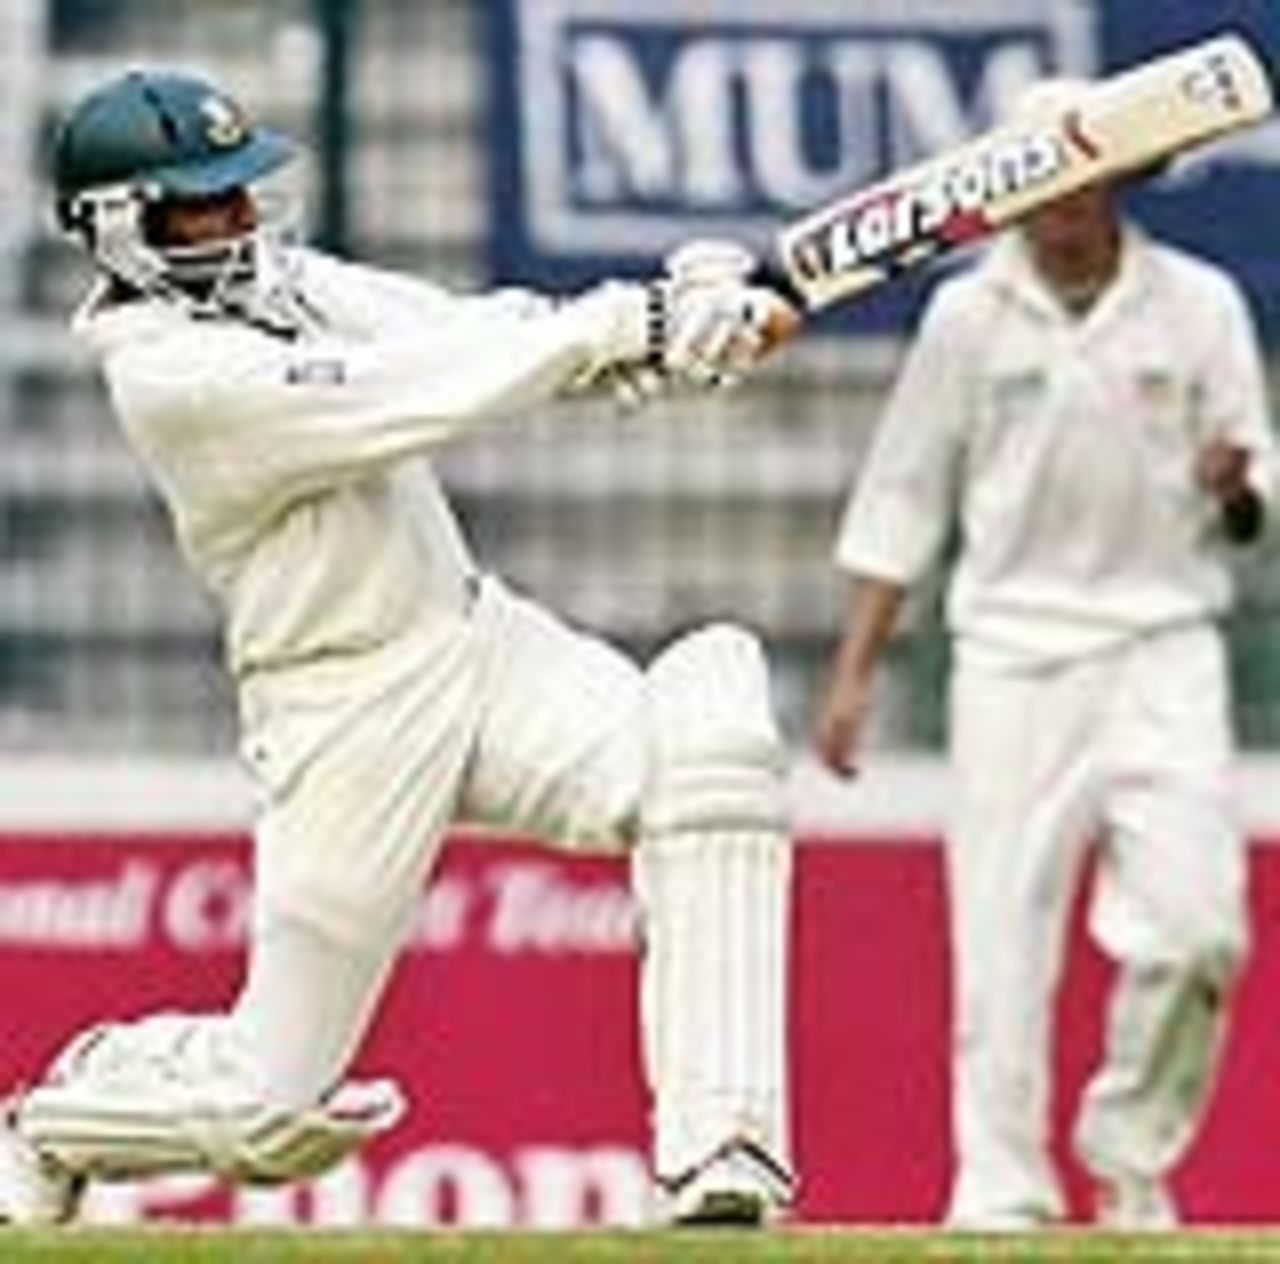 Nafis Iqbal hits out, Bangladesh v Zimbabwe, 2nd Test, Dhaka, 5th day, January 18, 2005